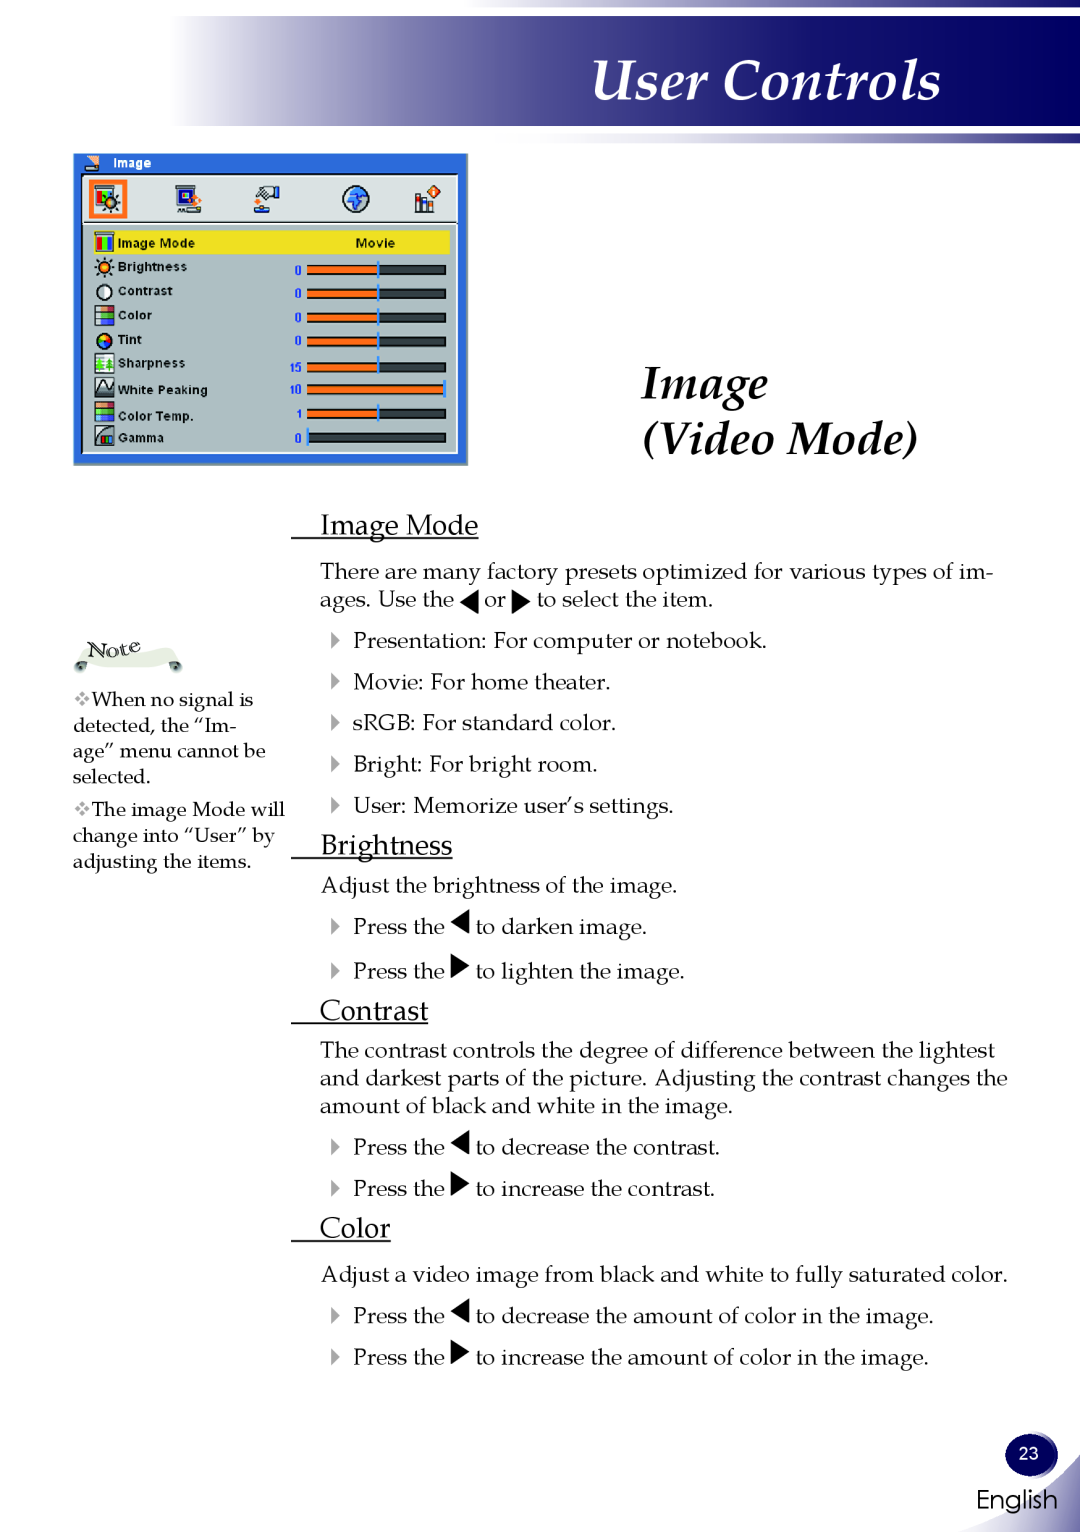 Sanyo PDG-DWL100 owner manual Image Video Mode, Color, User Controls, Image Mode, Brightness, Contrast, English 